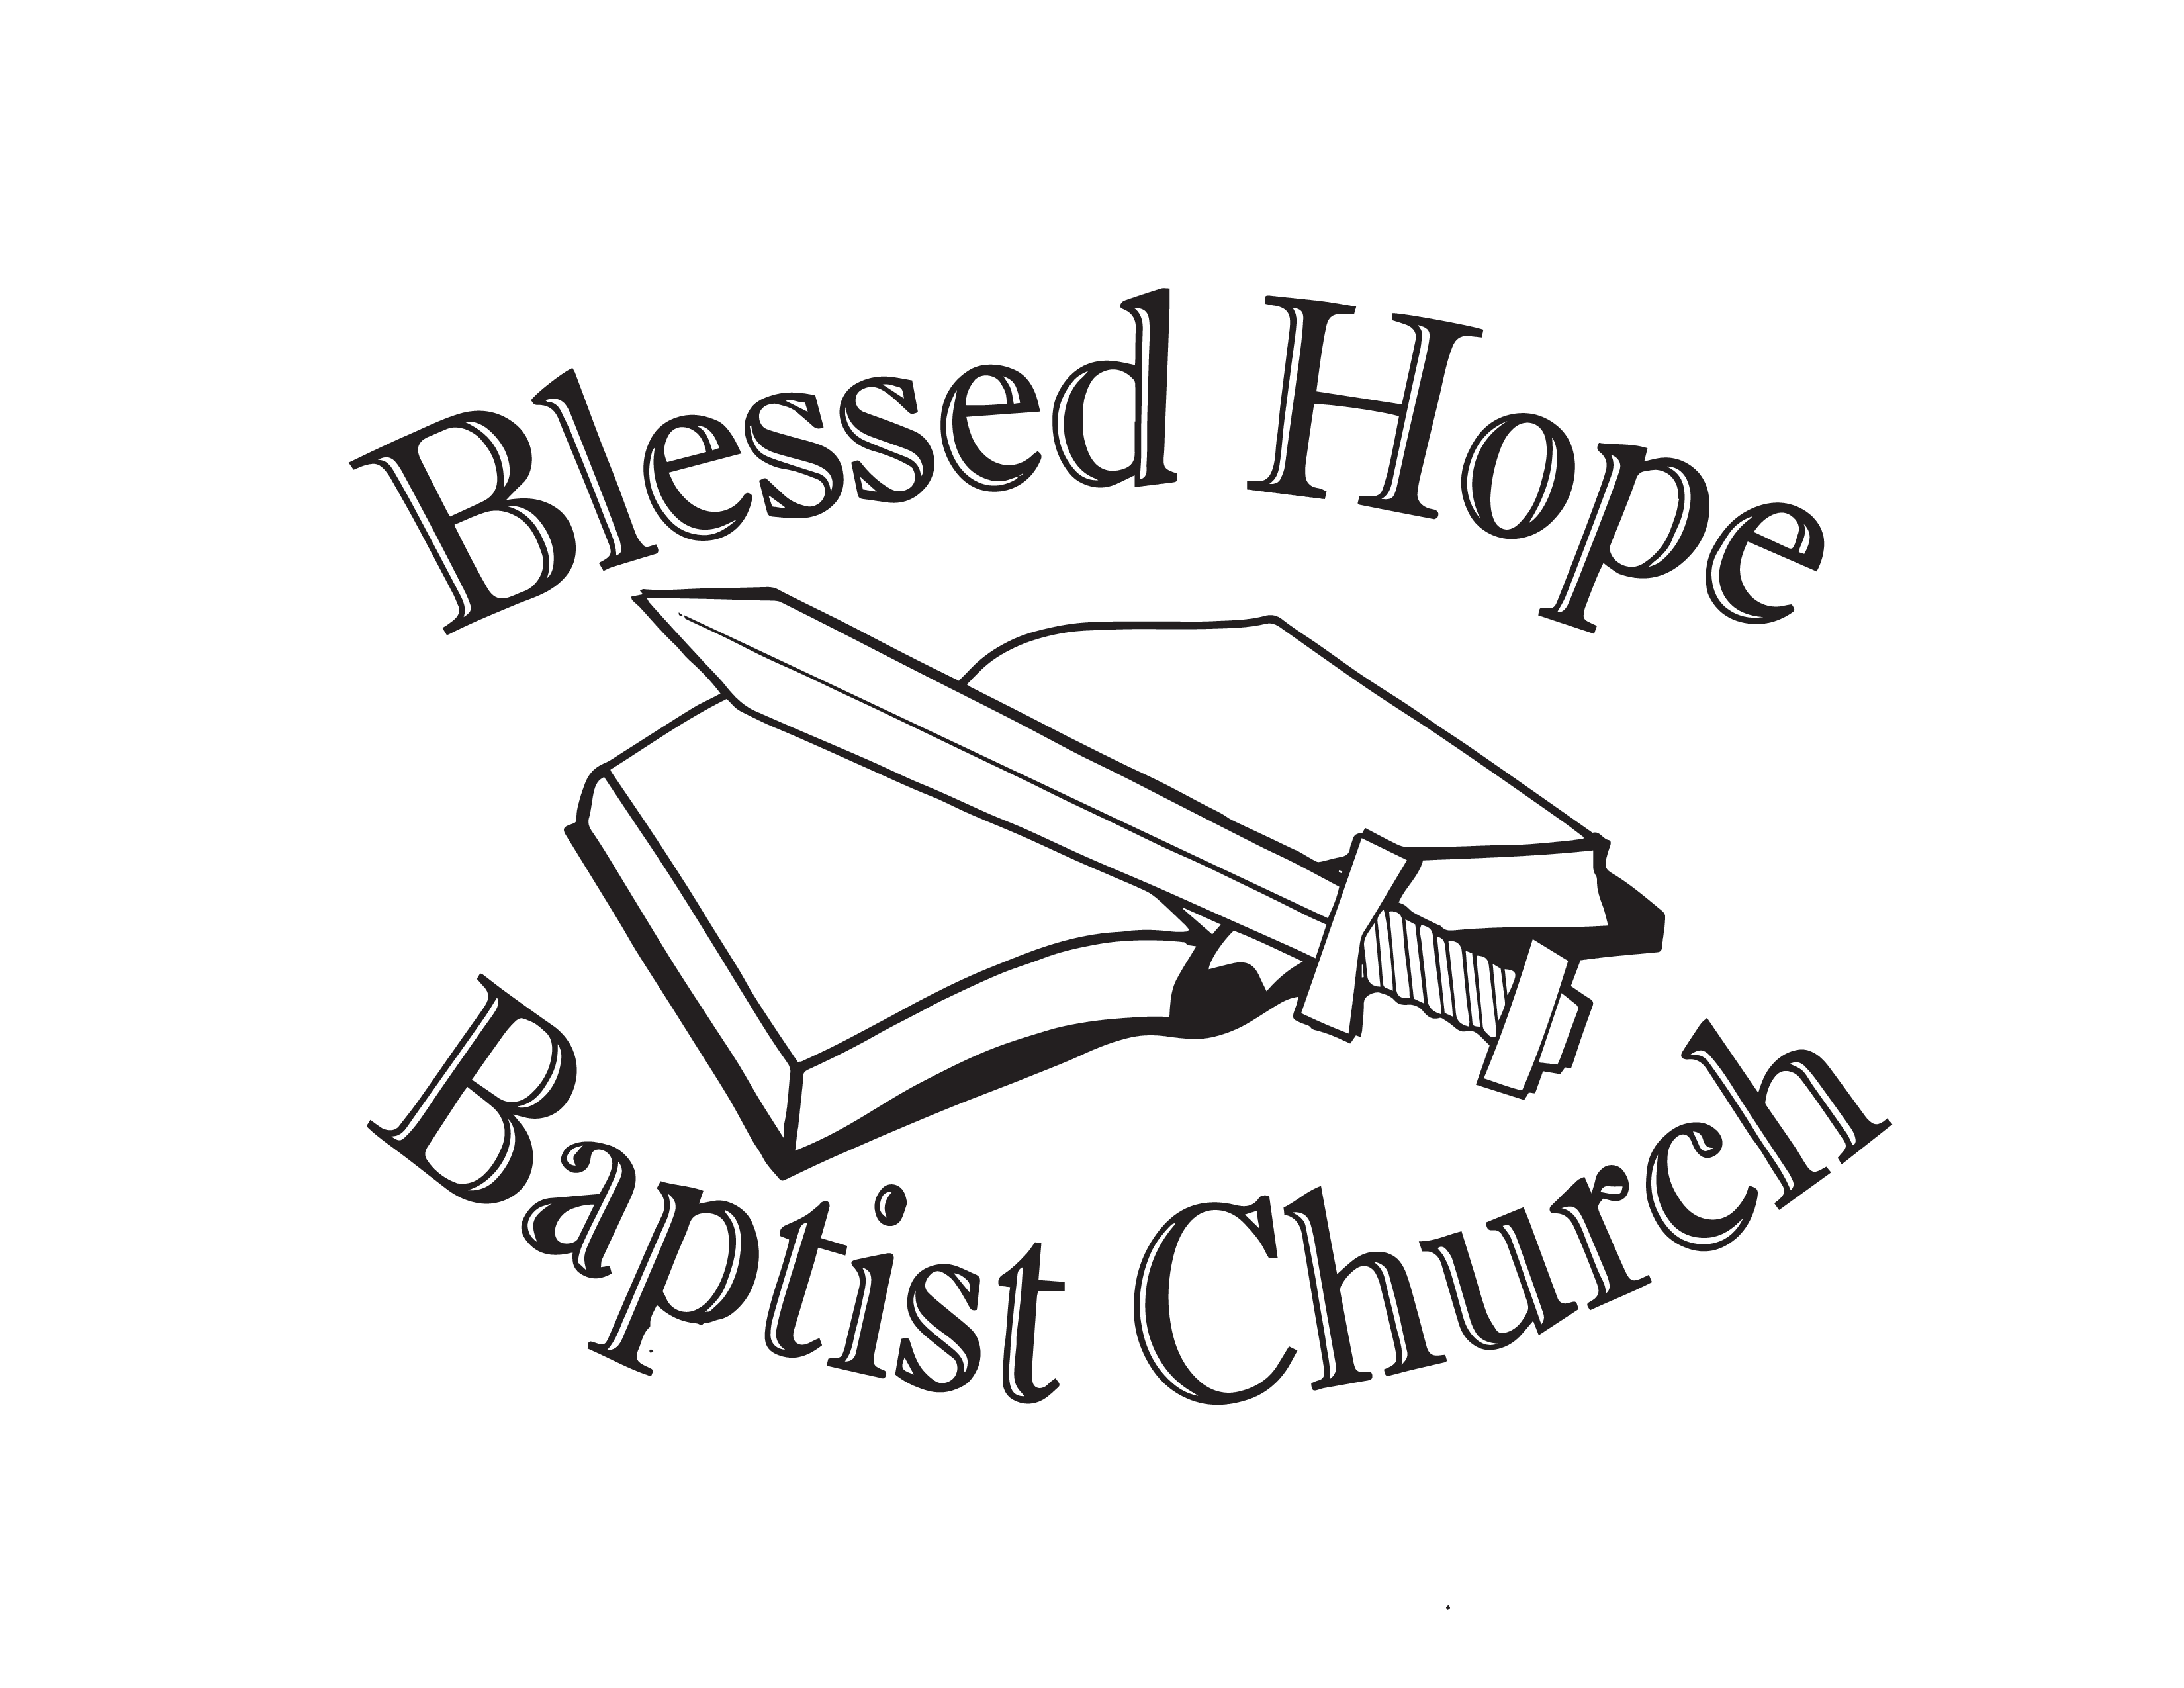 Blessed Hope Baptist Church